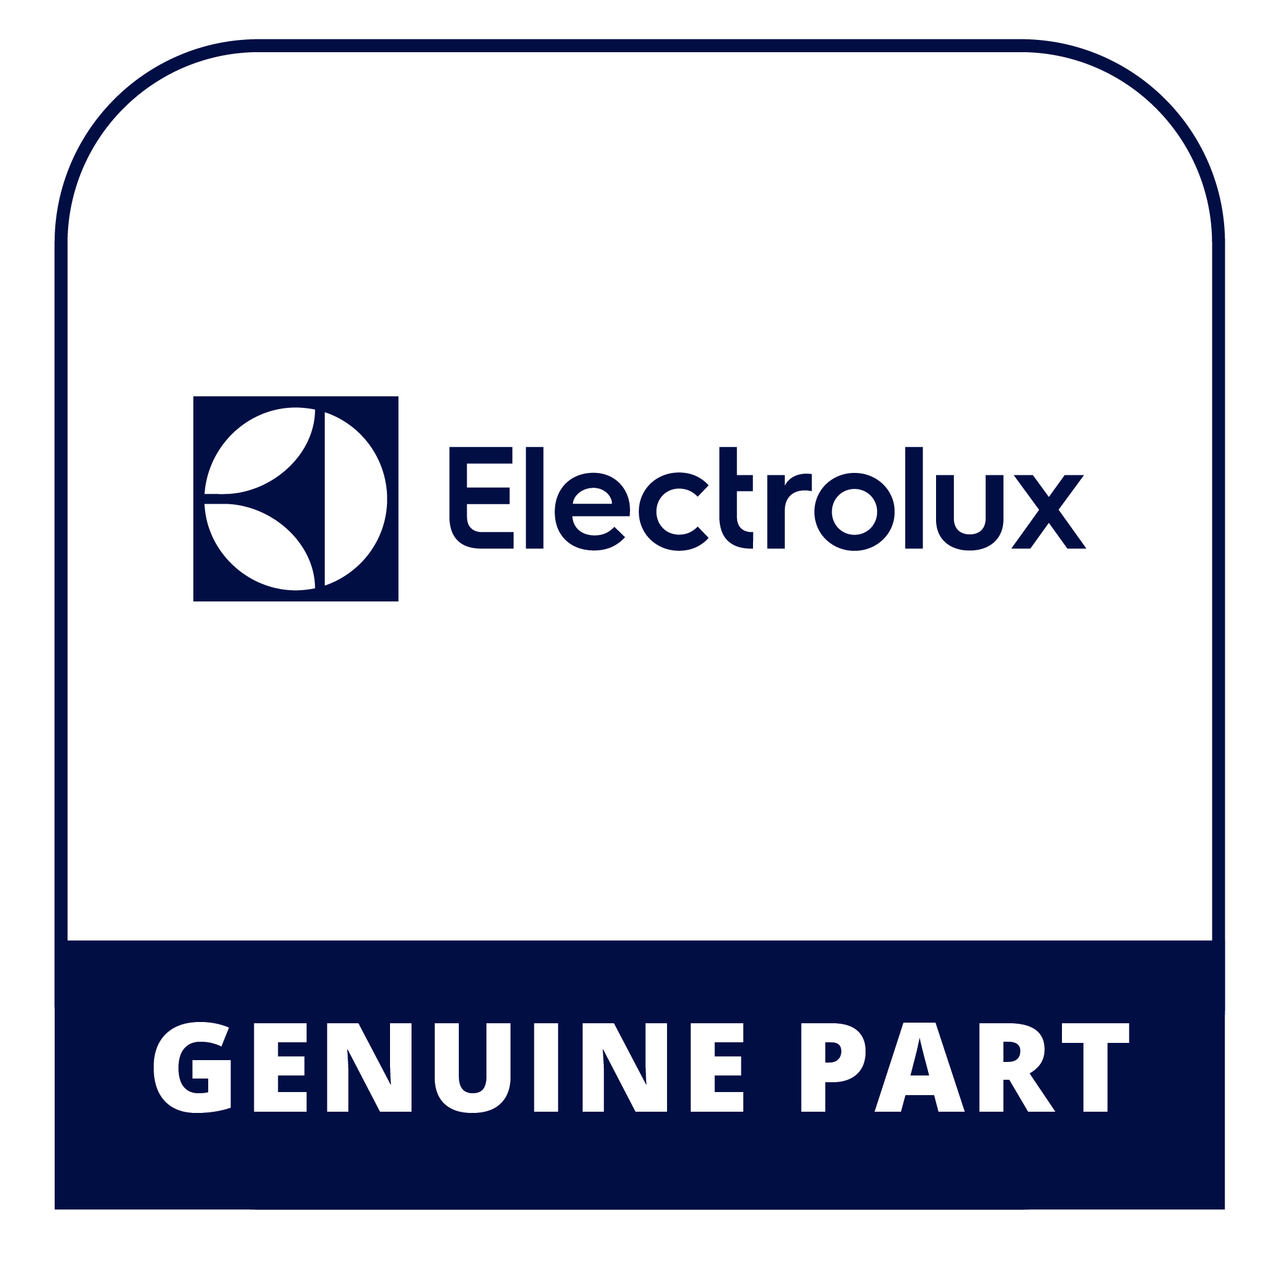 Frigidaire - Electrolux 316633014 Overlay - Genuine Electrolux Part